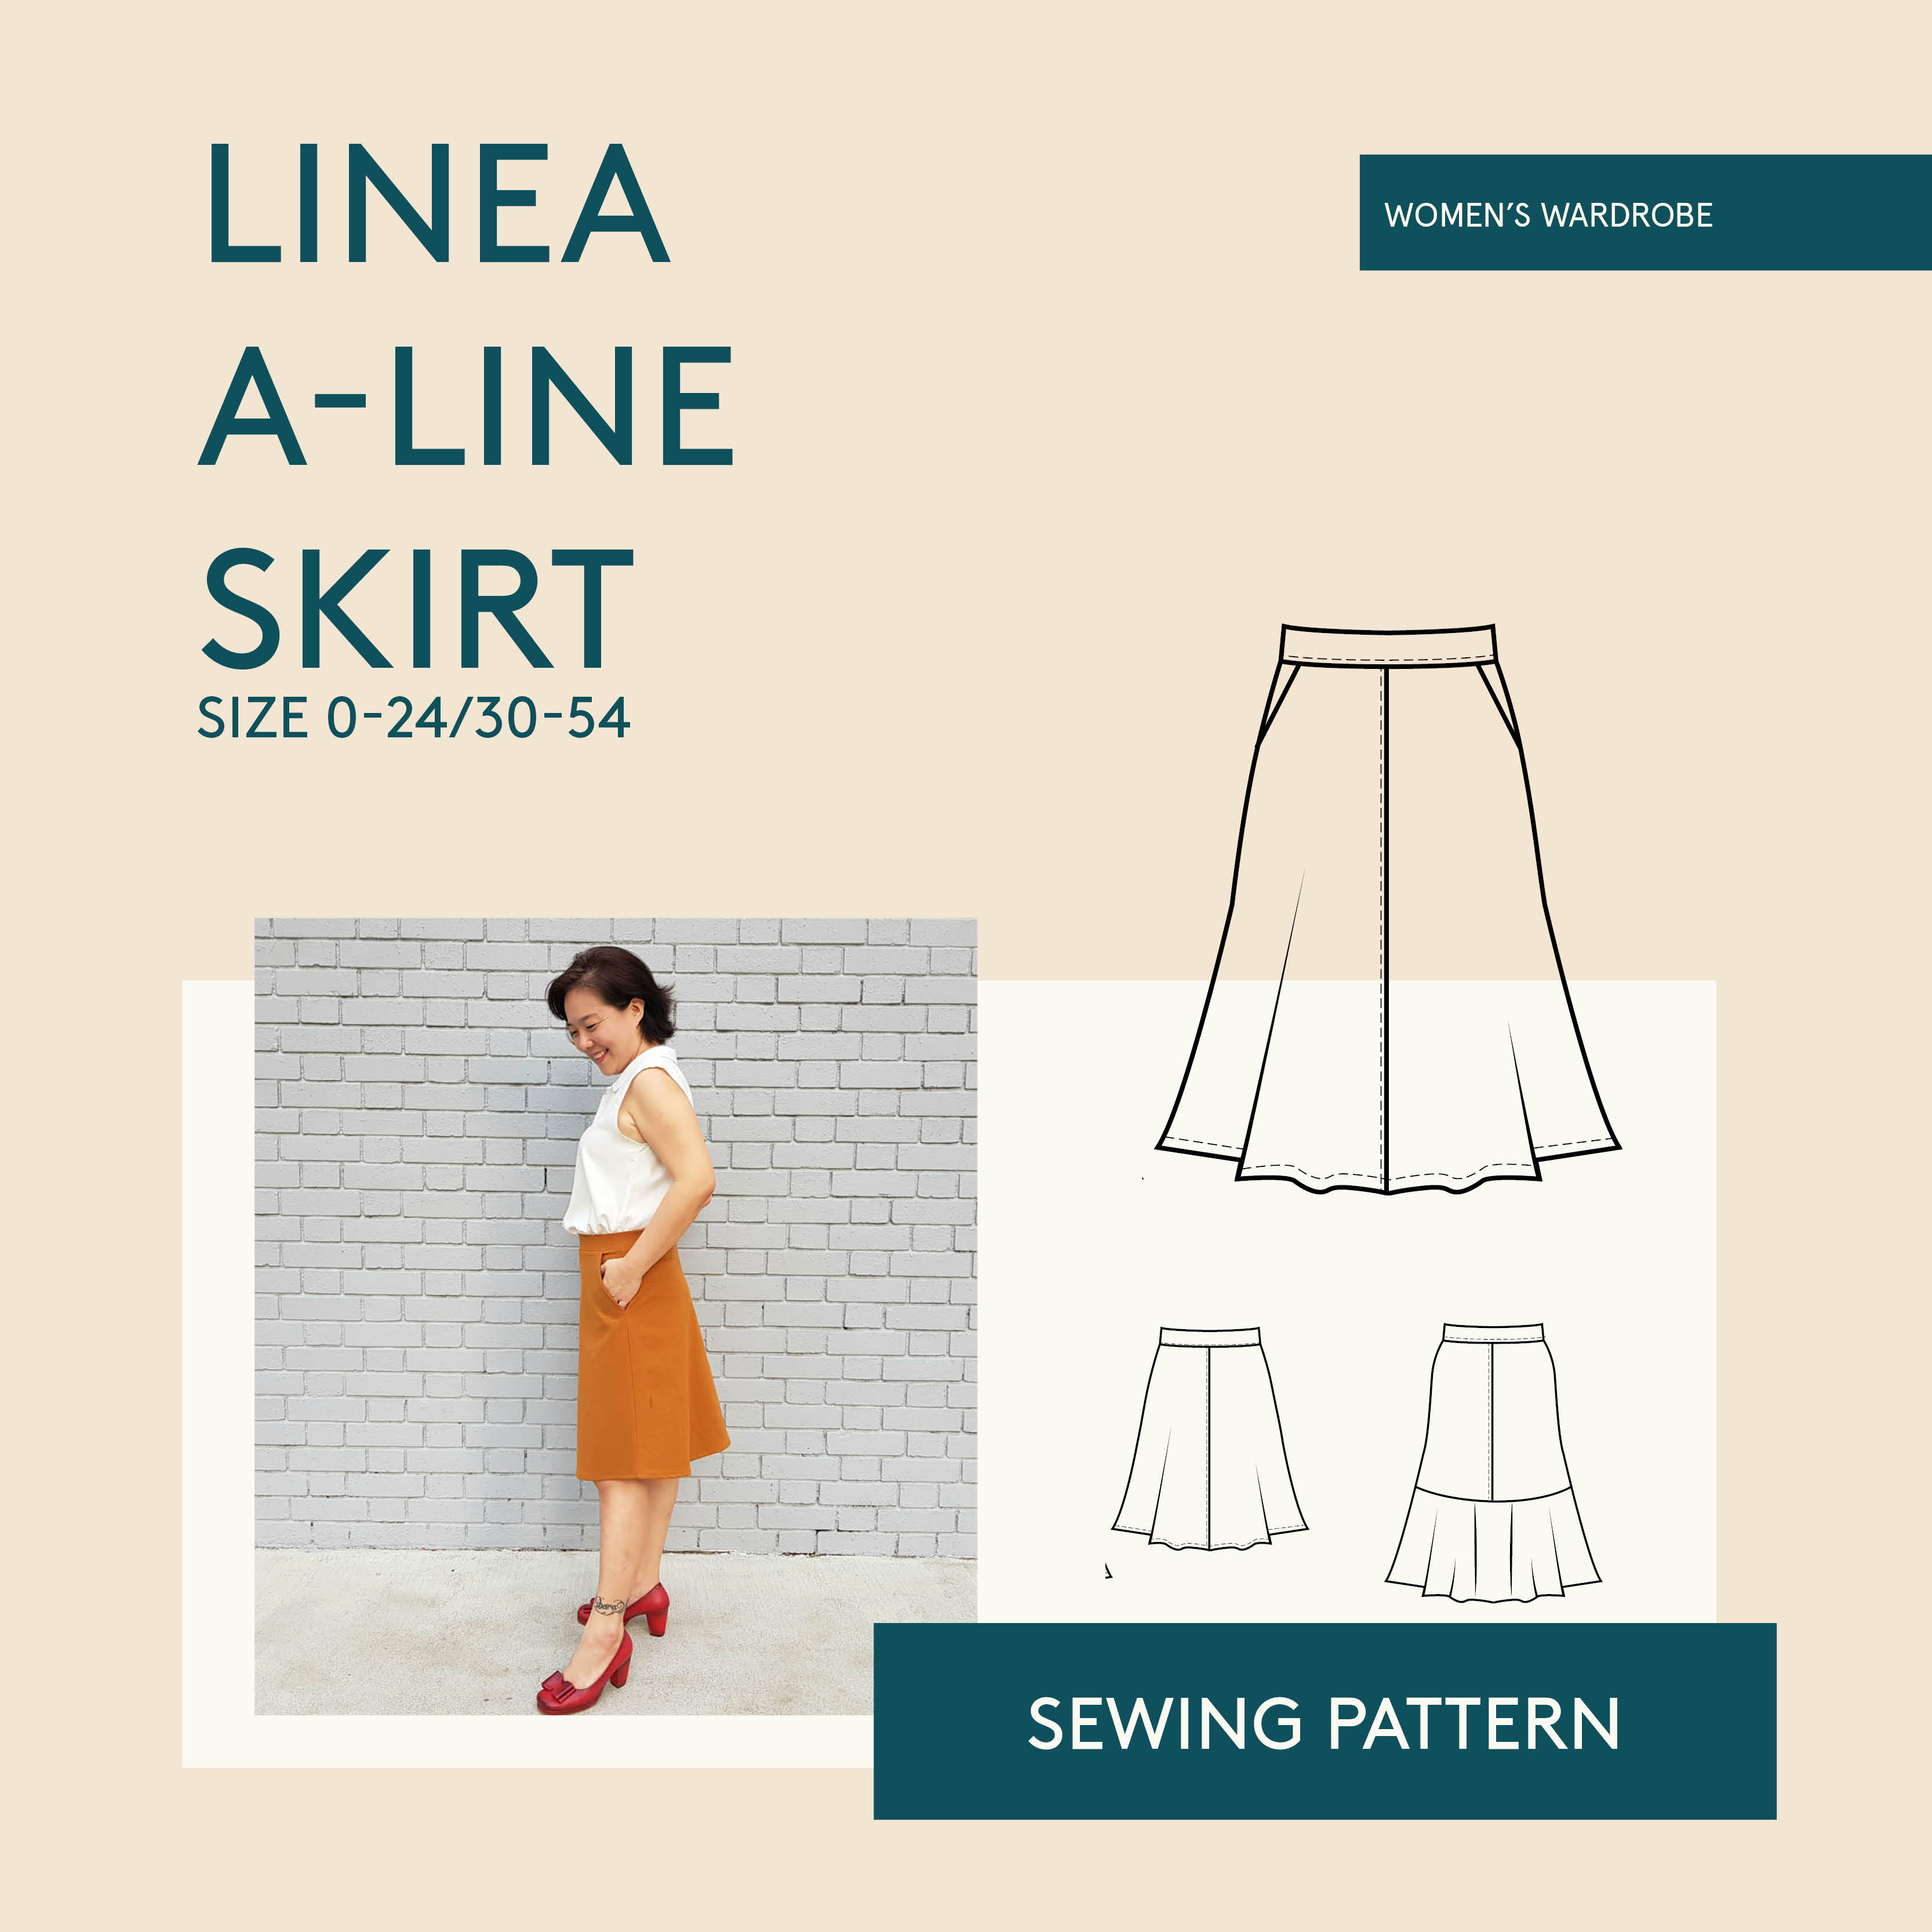 Wardrobe by Me Linea A-line Skirt - The Fold Line